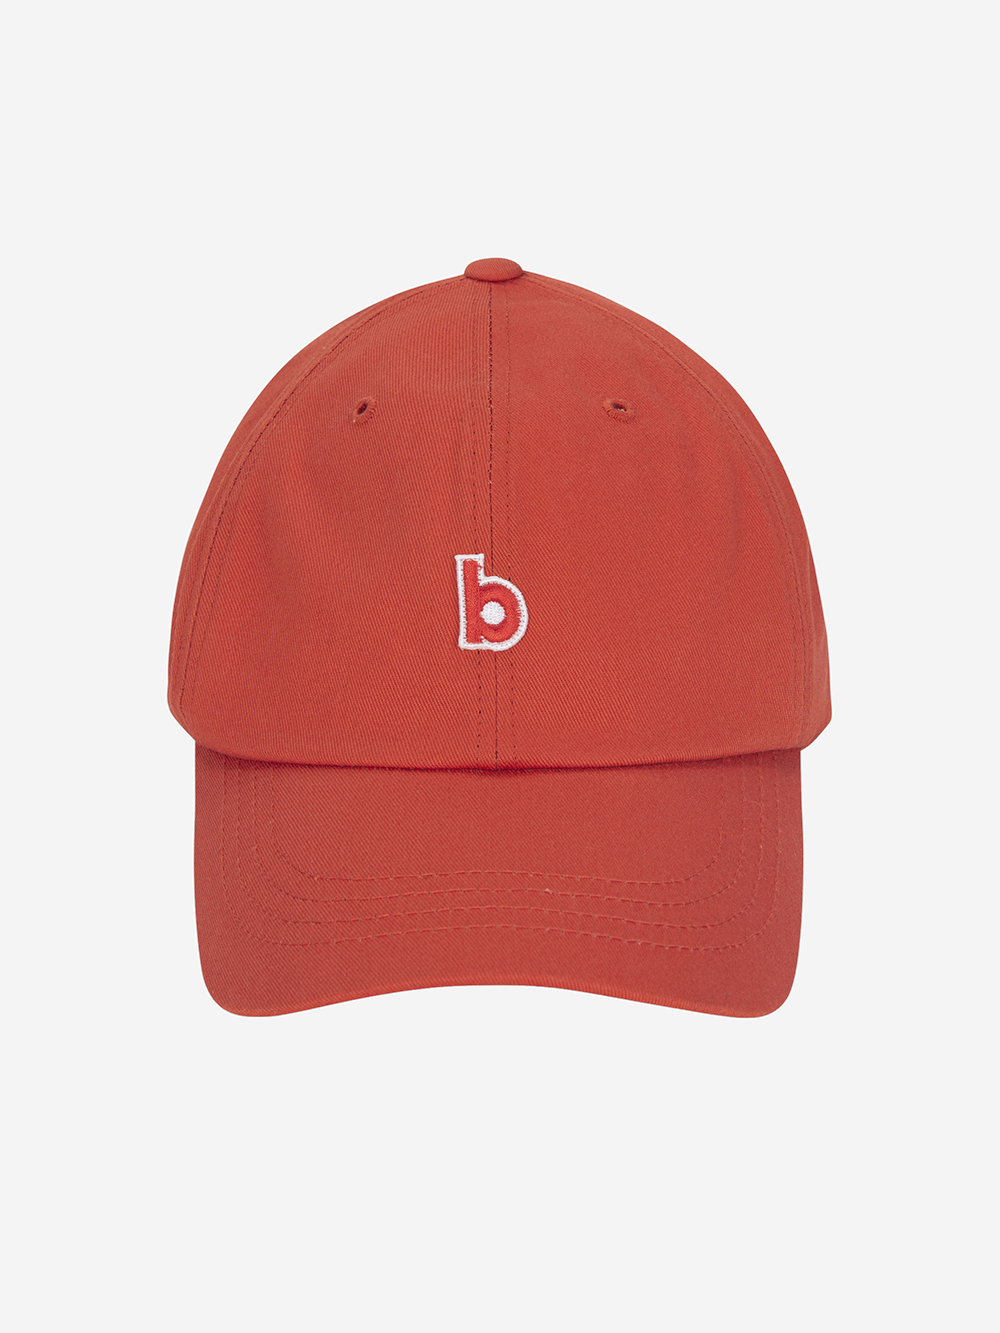 Billboard Global B logo Ball Cap_Red